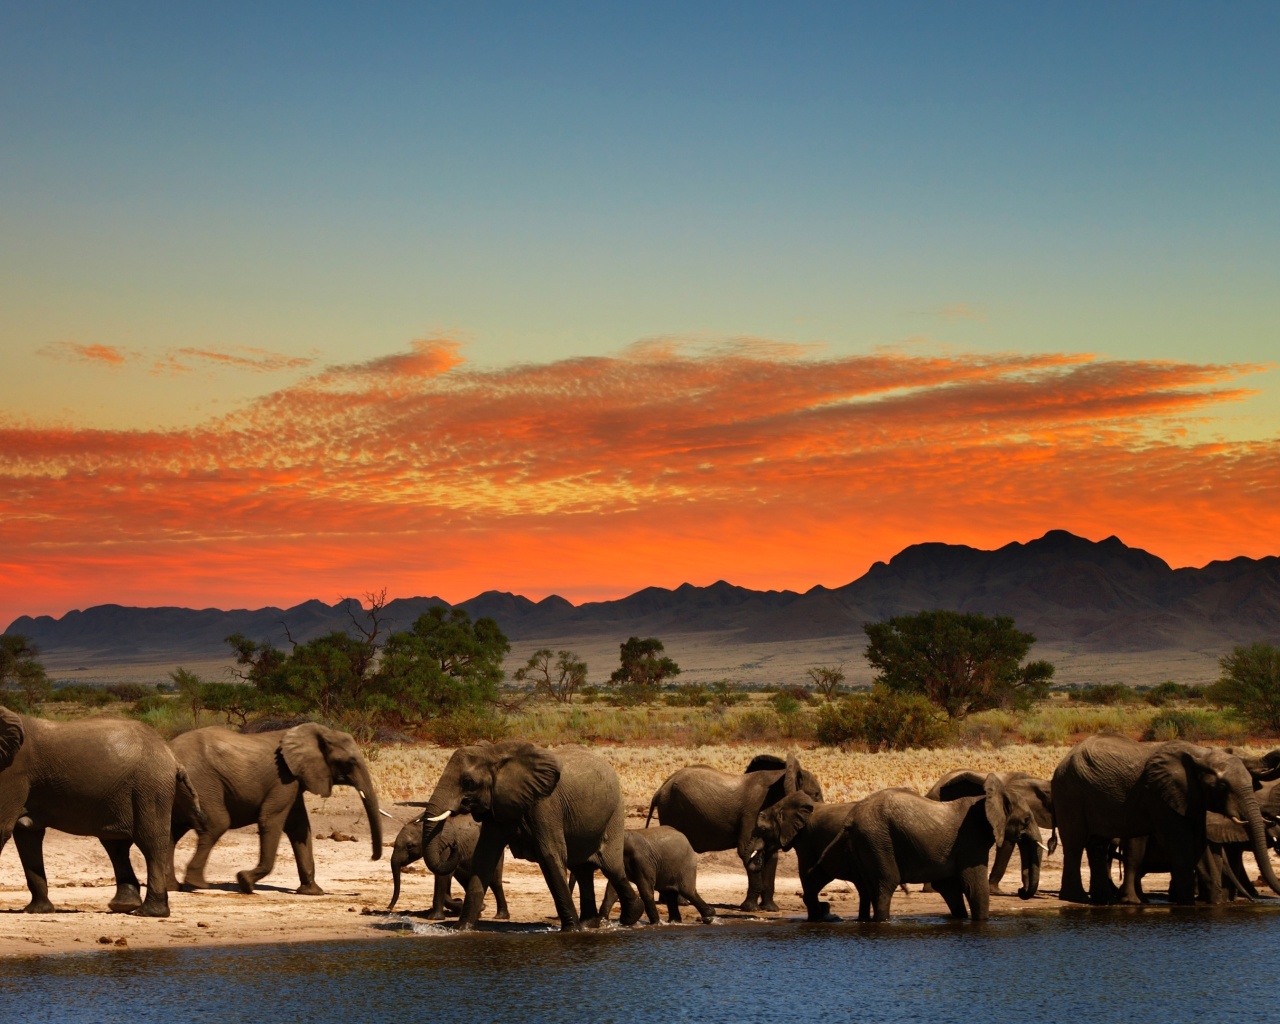 Das Herd of elephants Safari Wallpaper 1280x1024